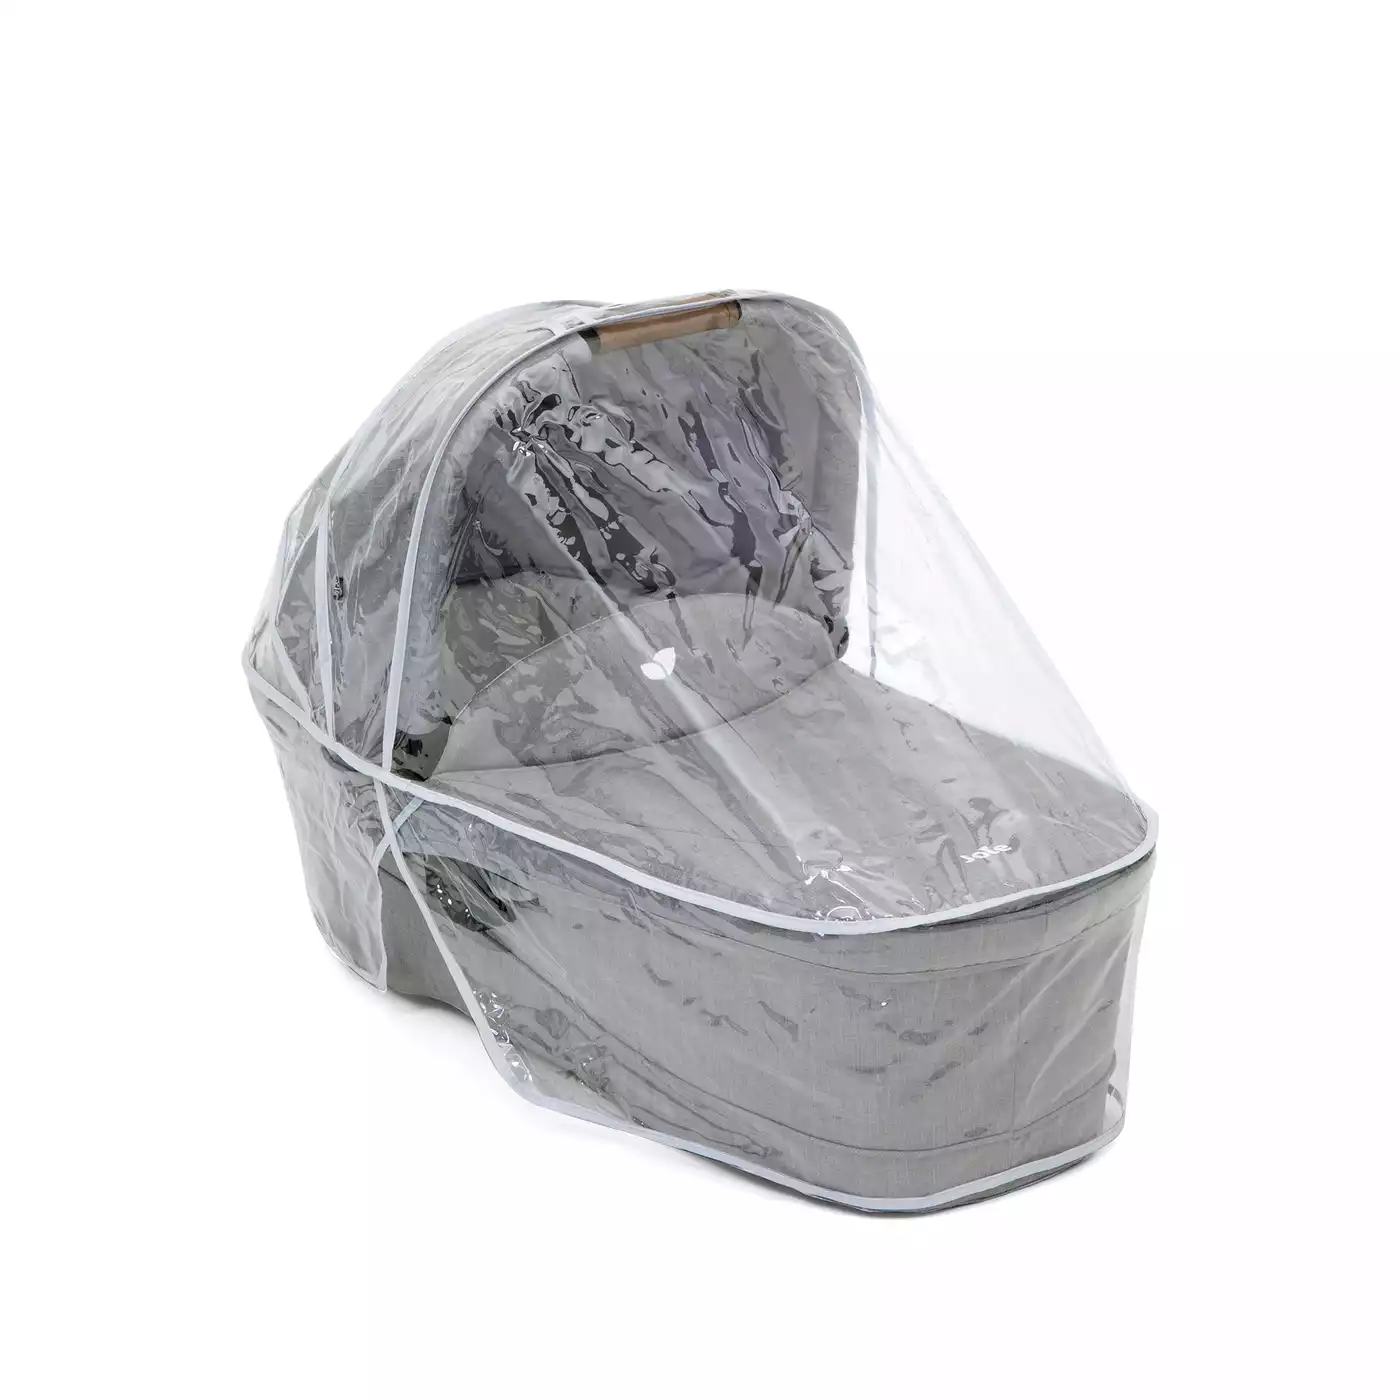 Versatrax Babywanne Ramble XL Gray Flannel Joie Grau 2000576691808 6